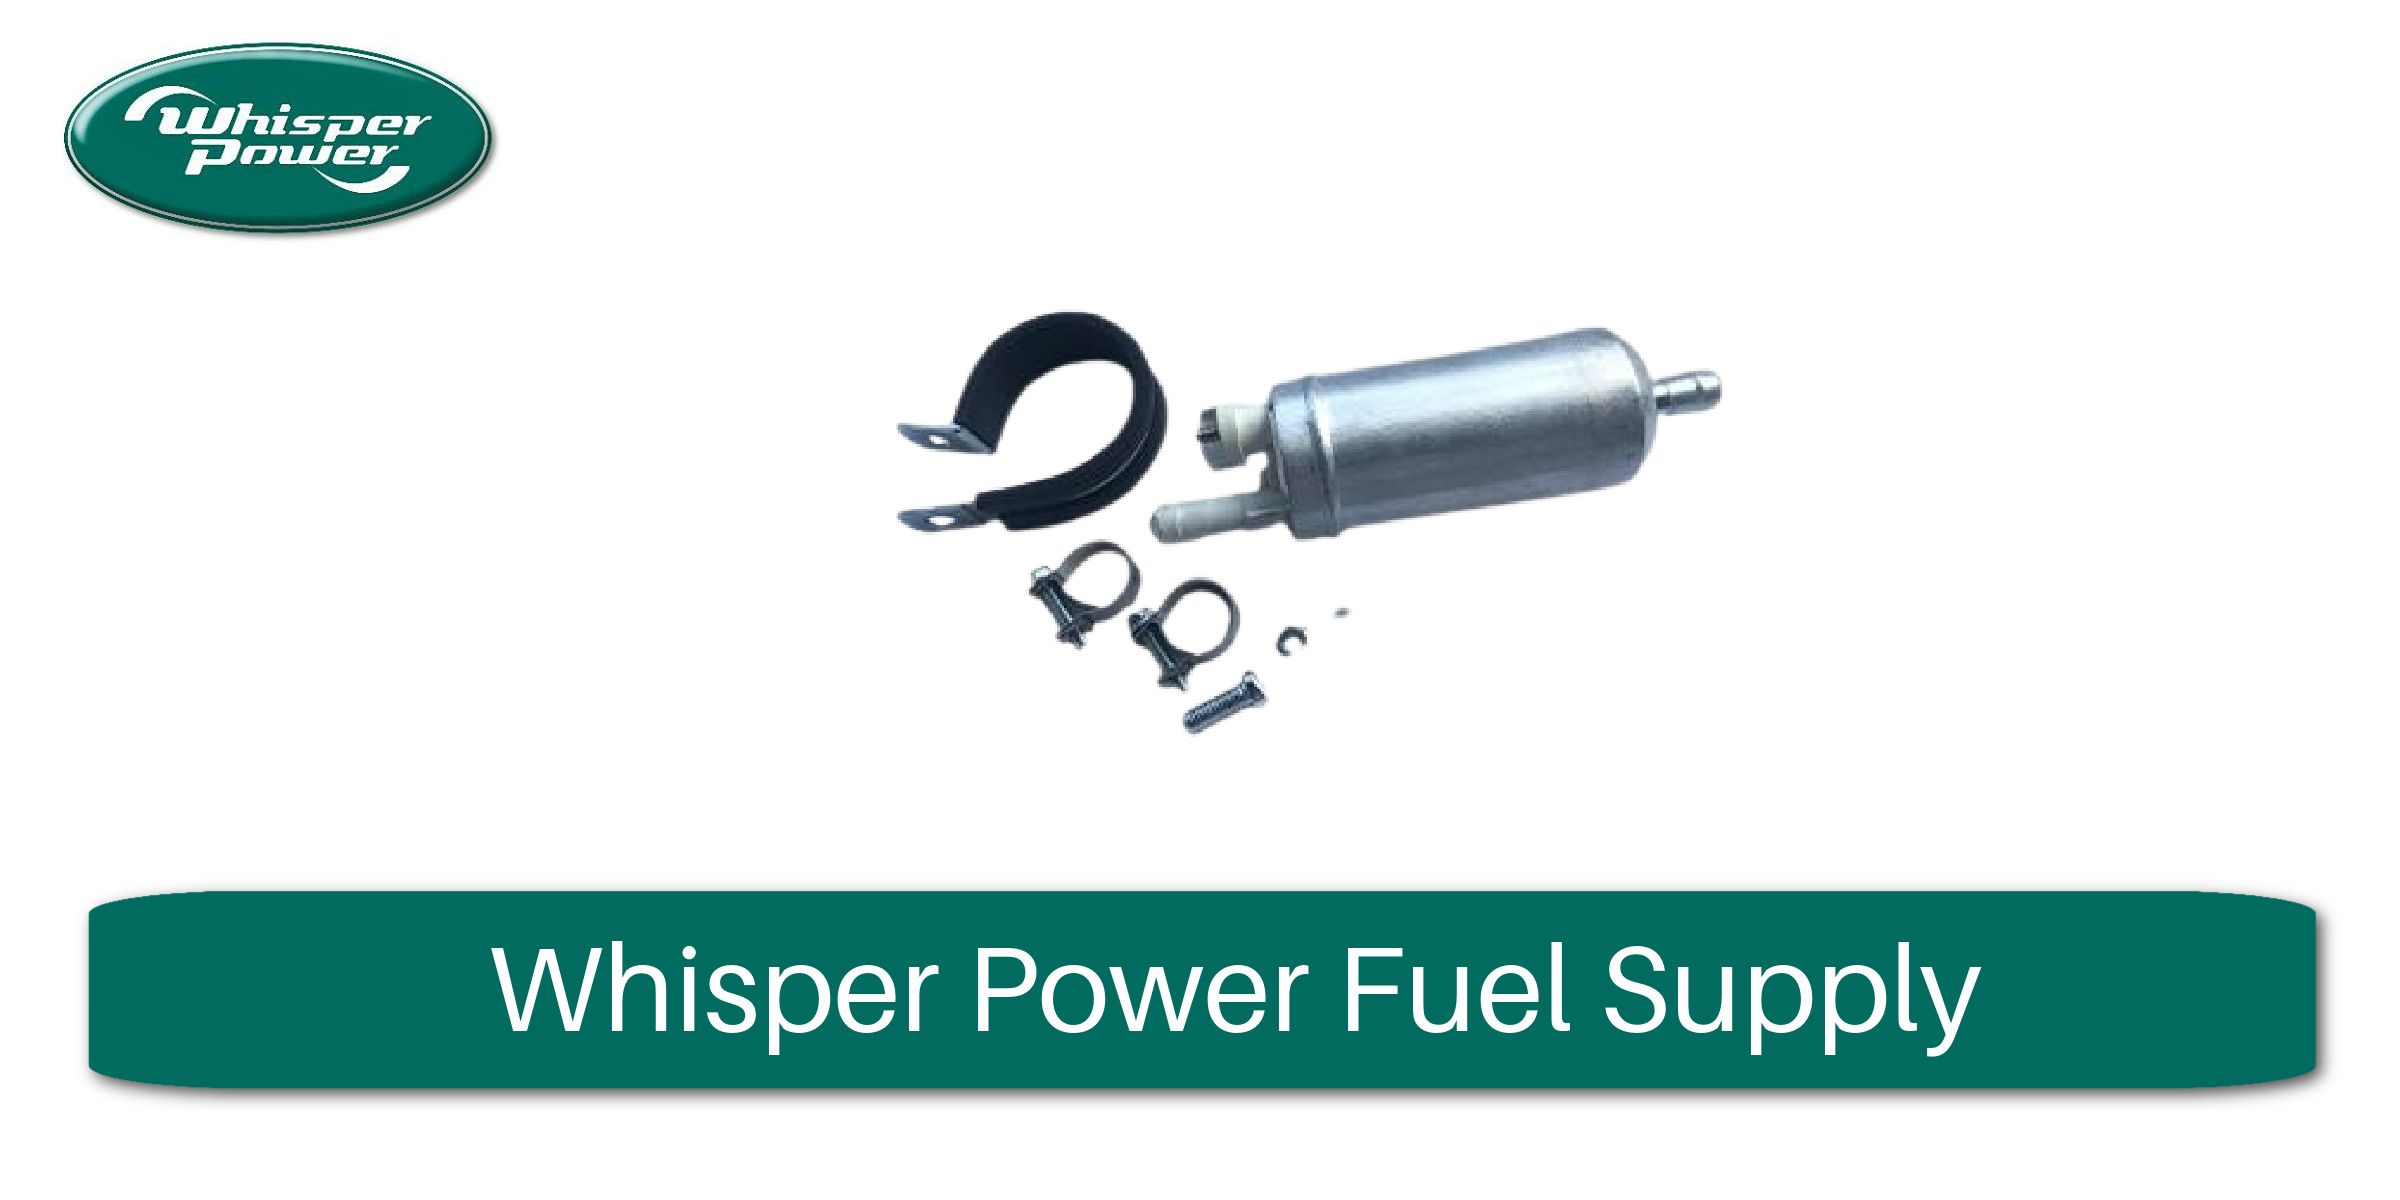 Whisper Power Fuel Supply